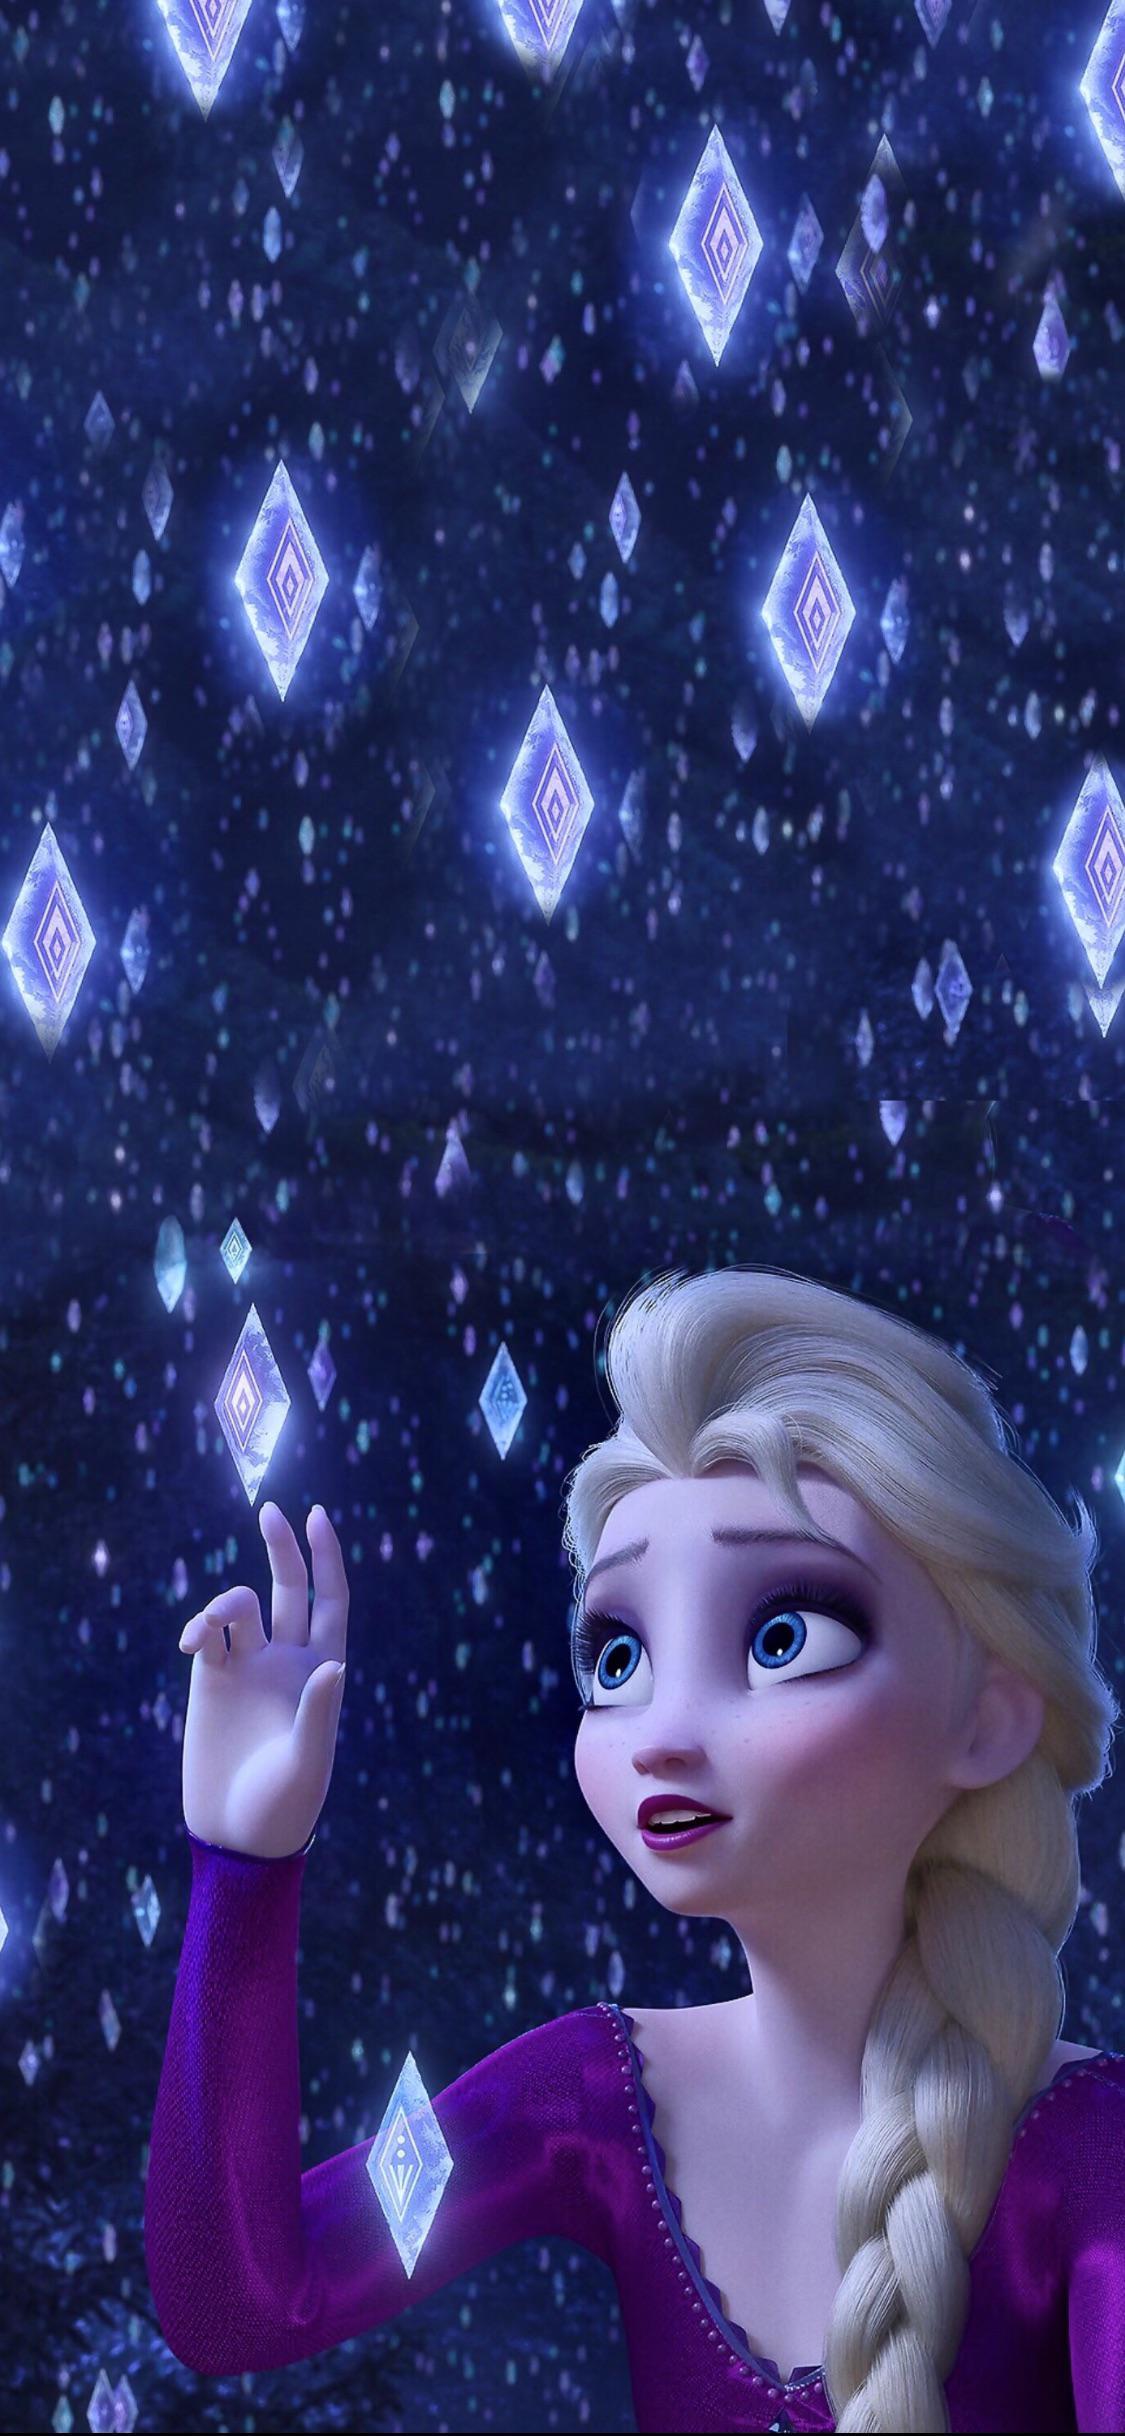 Elsa Frozen 2 Phone Wallpapers - Wallpaper Cave